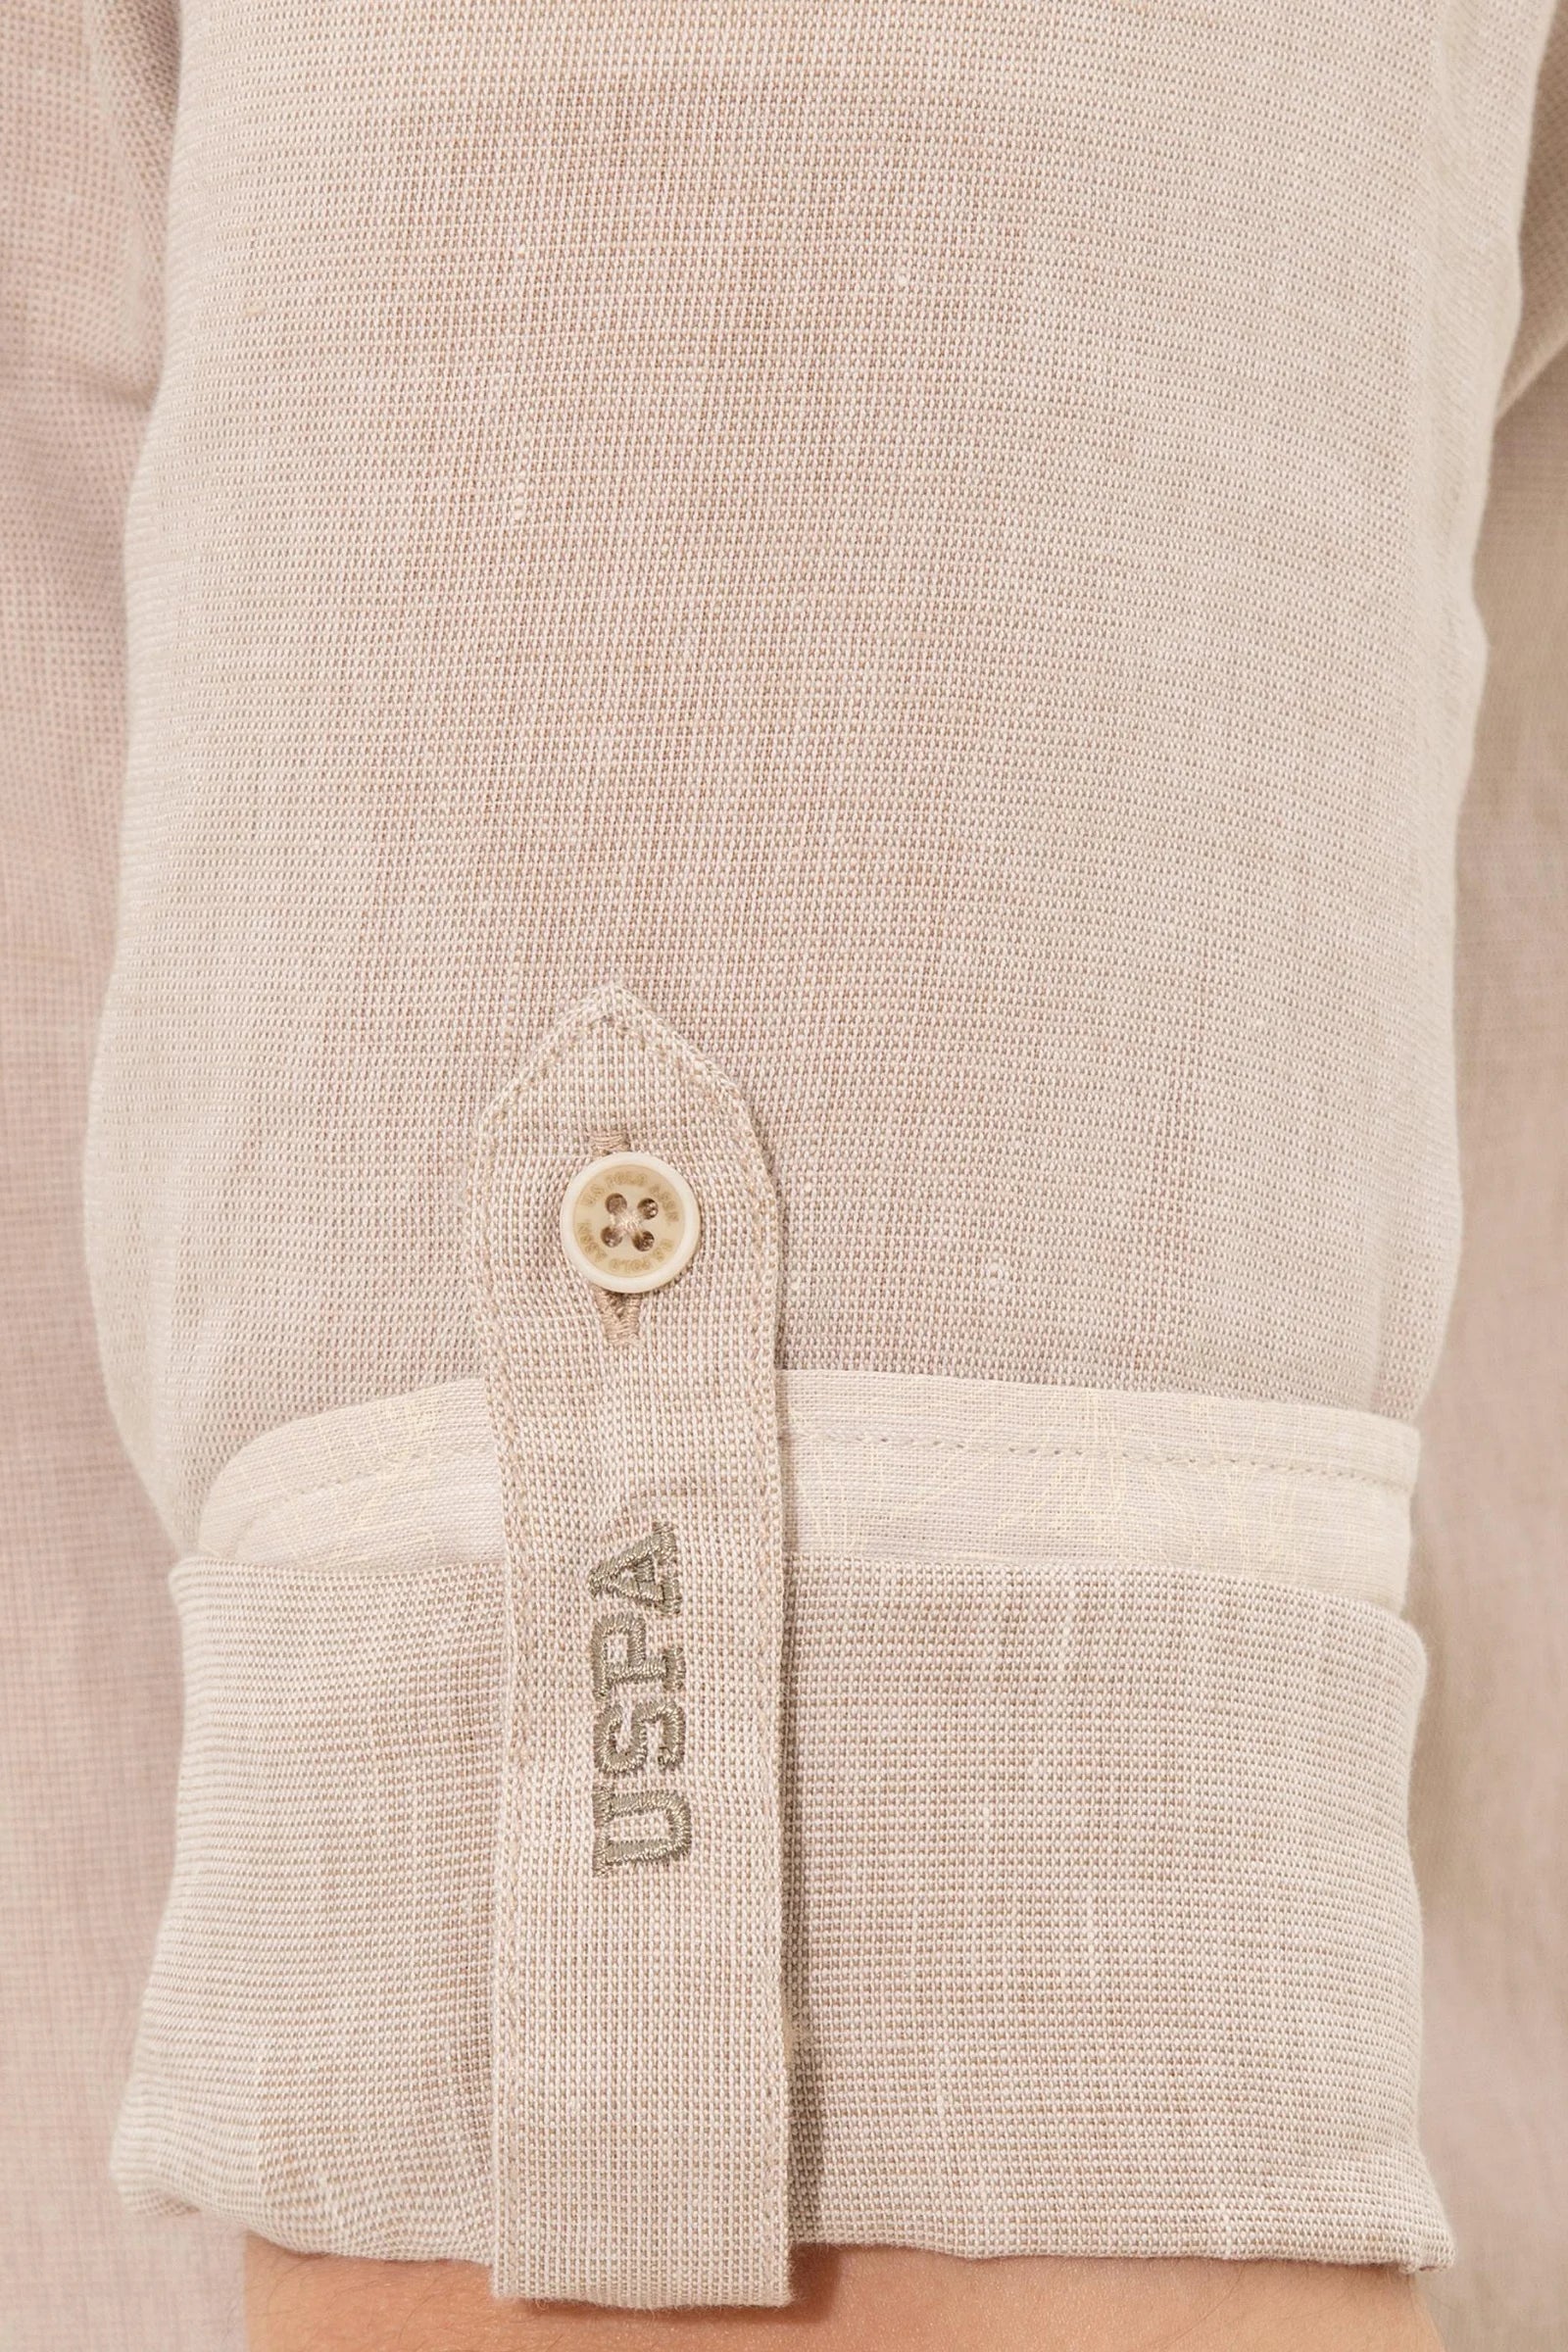 US Polo Assn. Regular Shirt Long Sleeve With A Single Pocket Small USPA Logo - Men